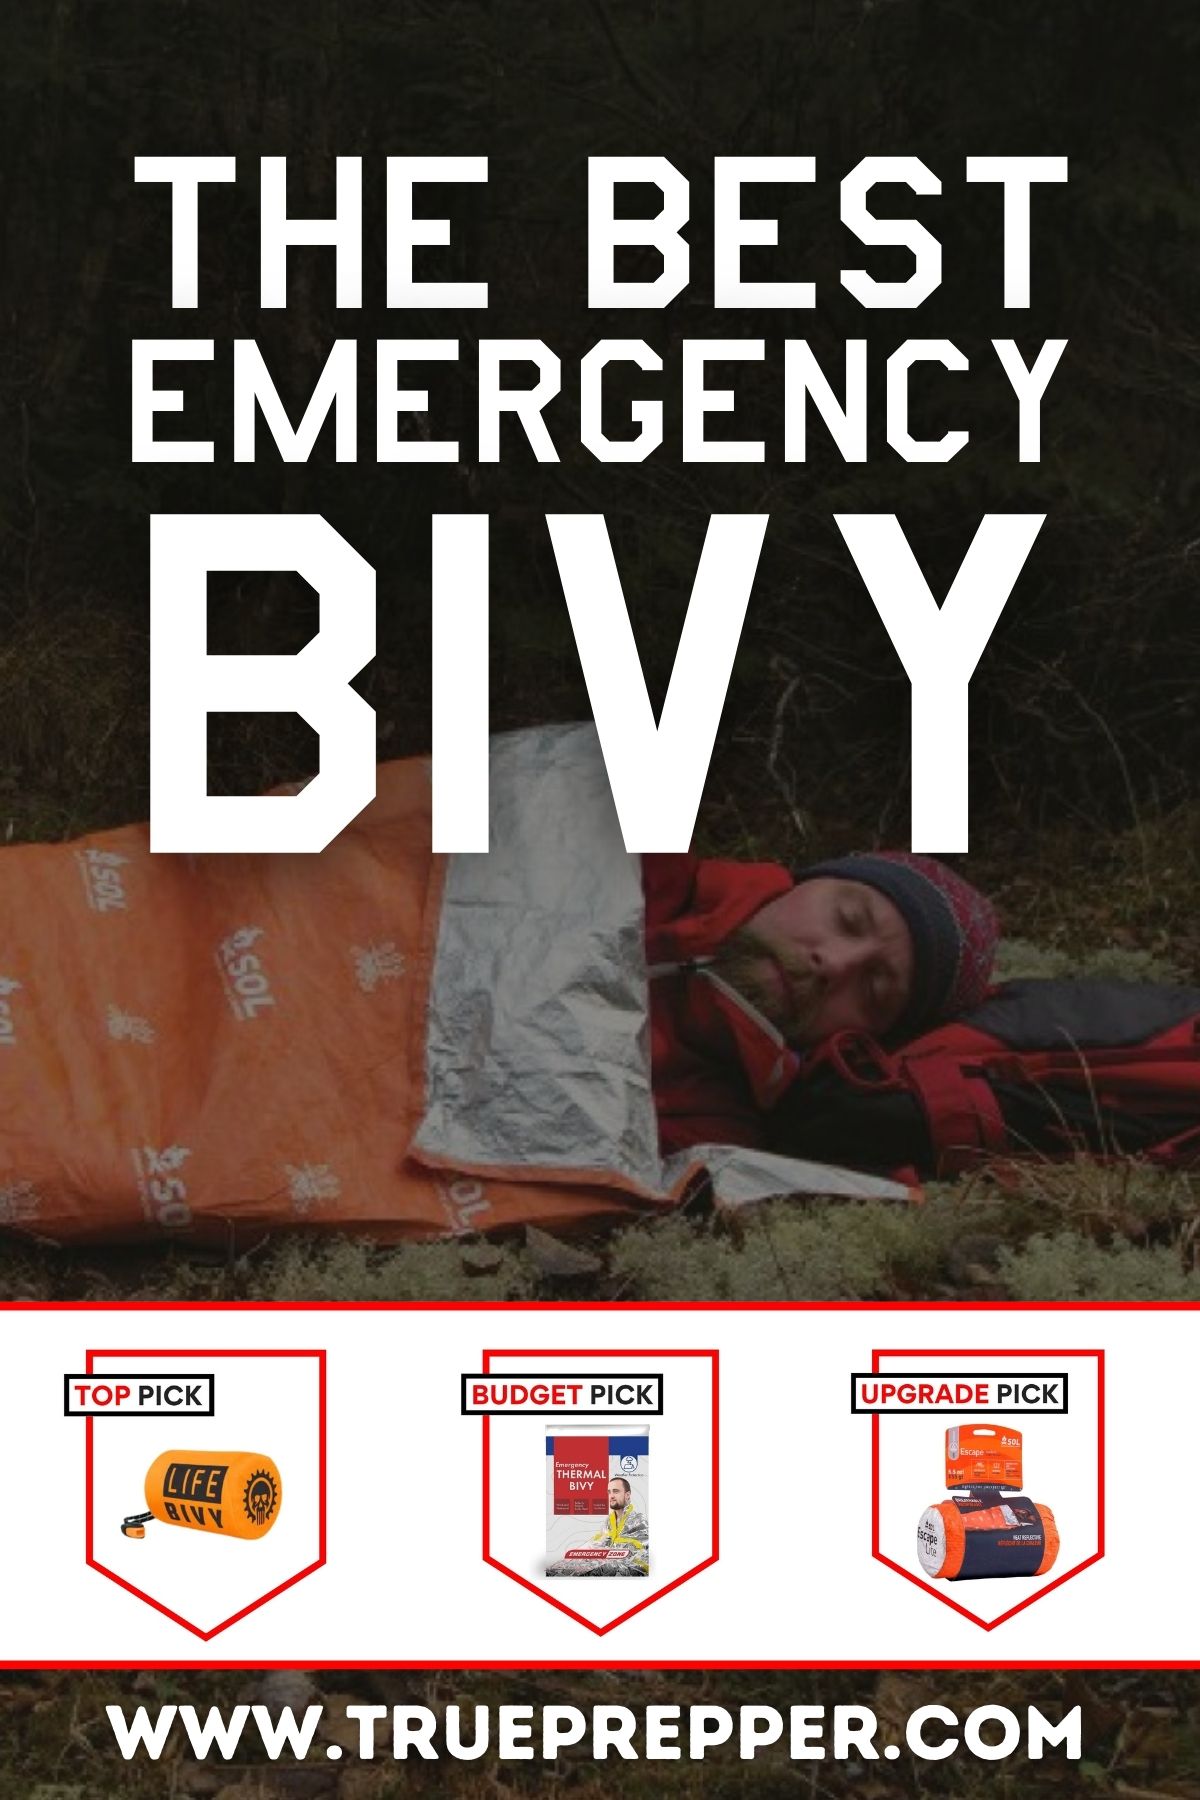 The Best Emergency Bivy